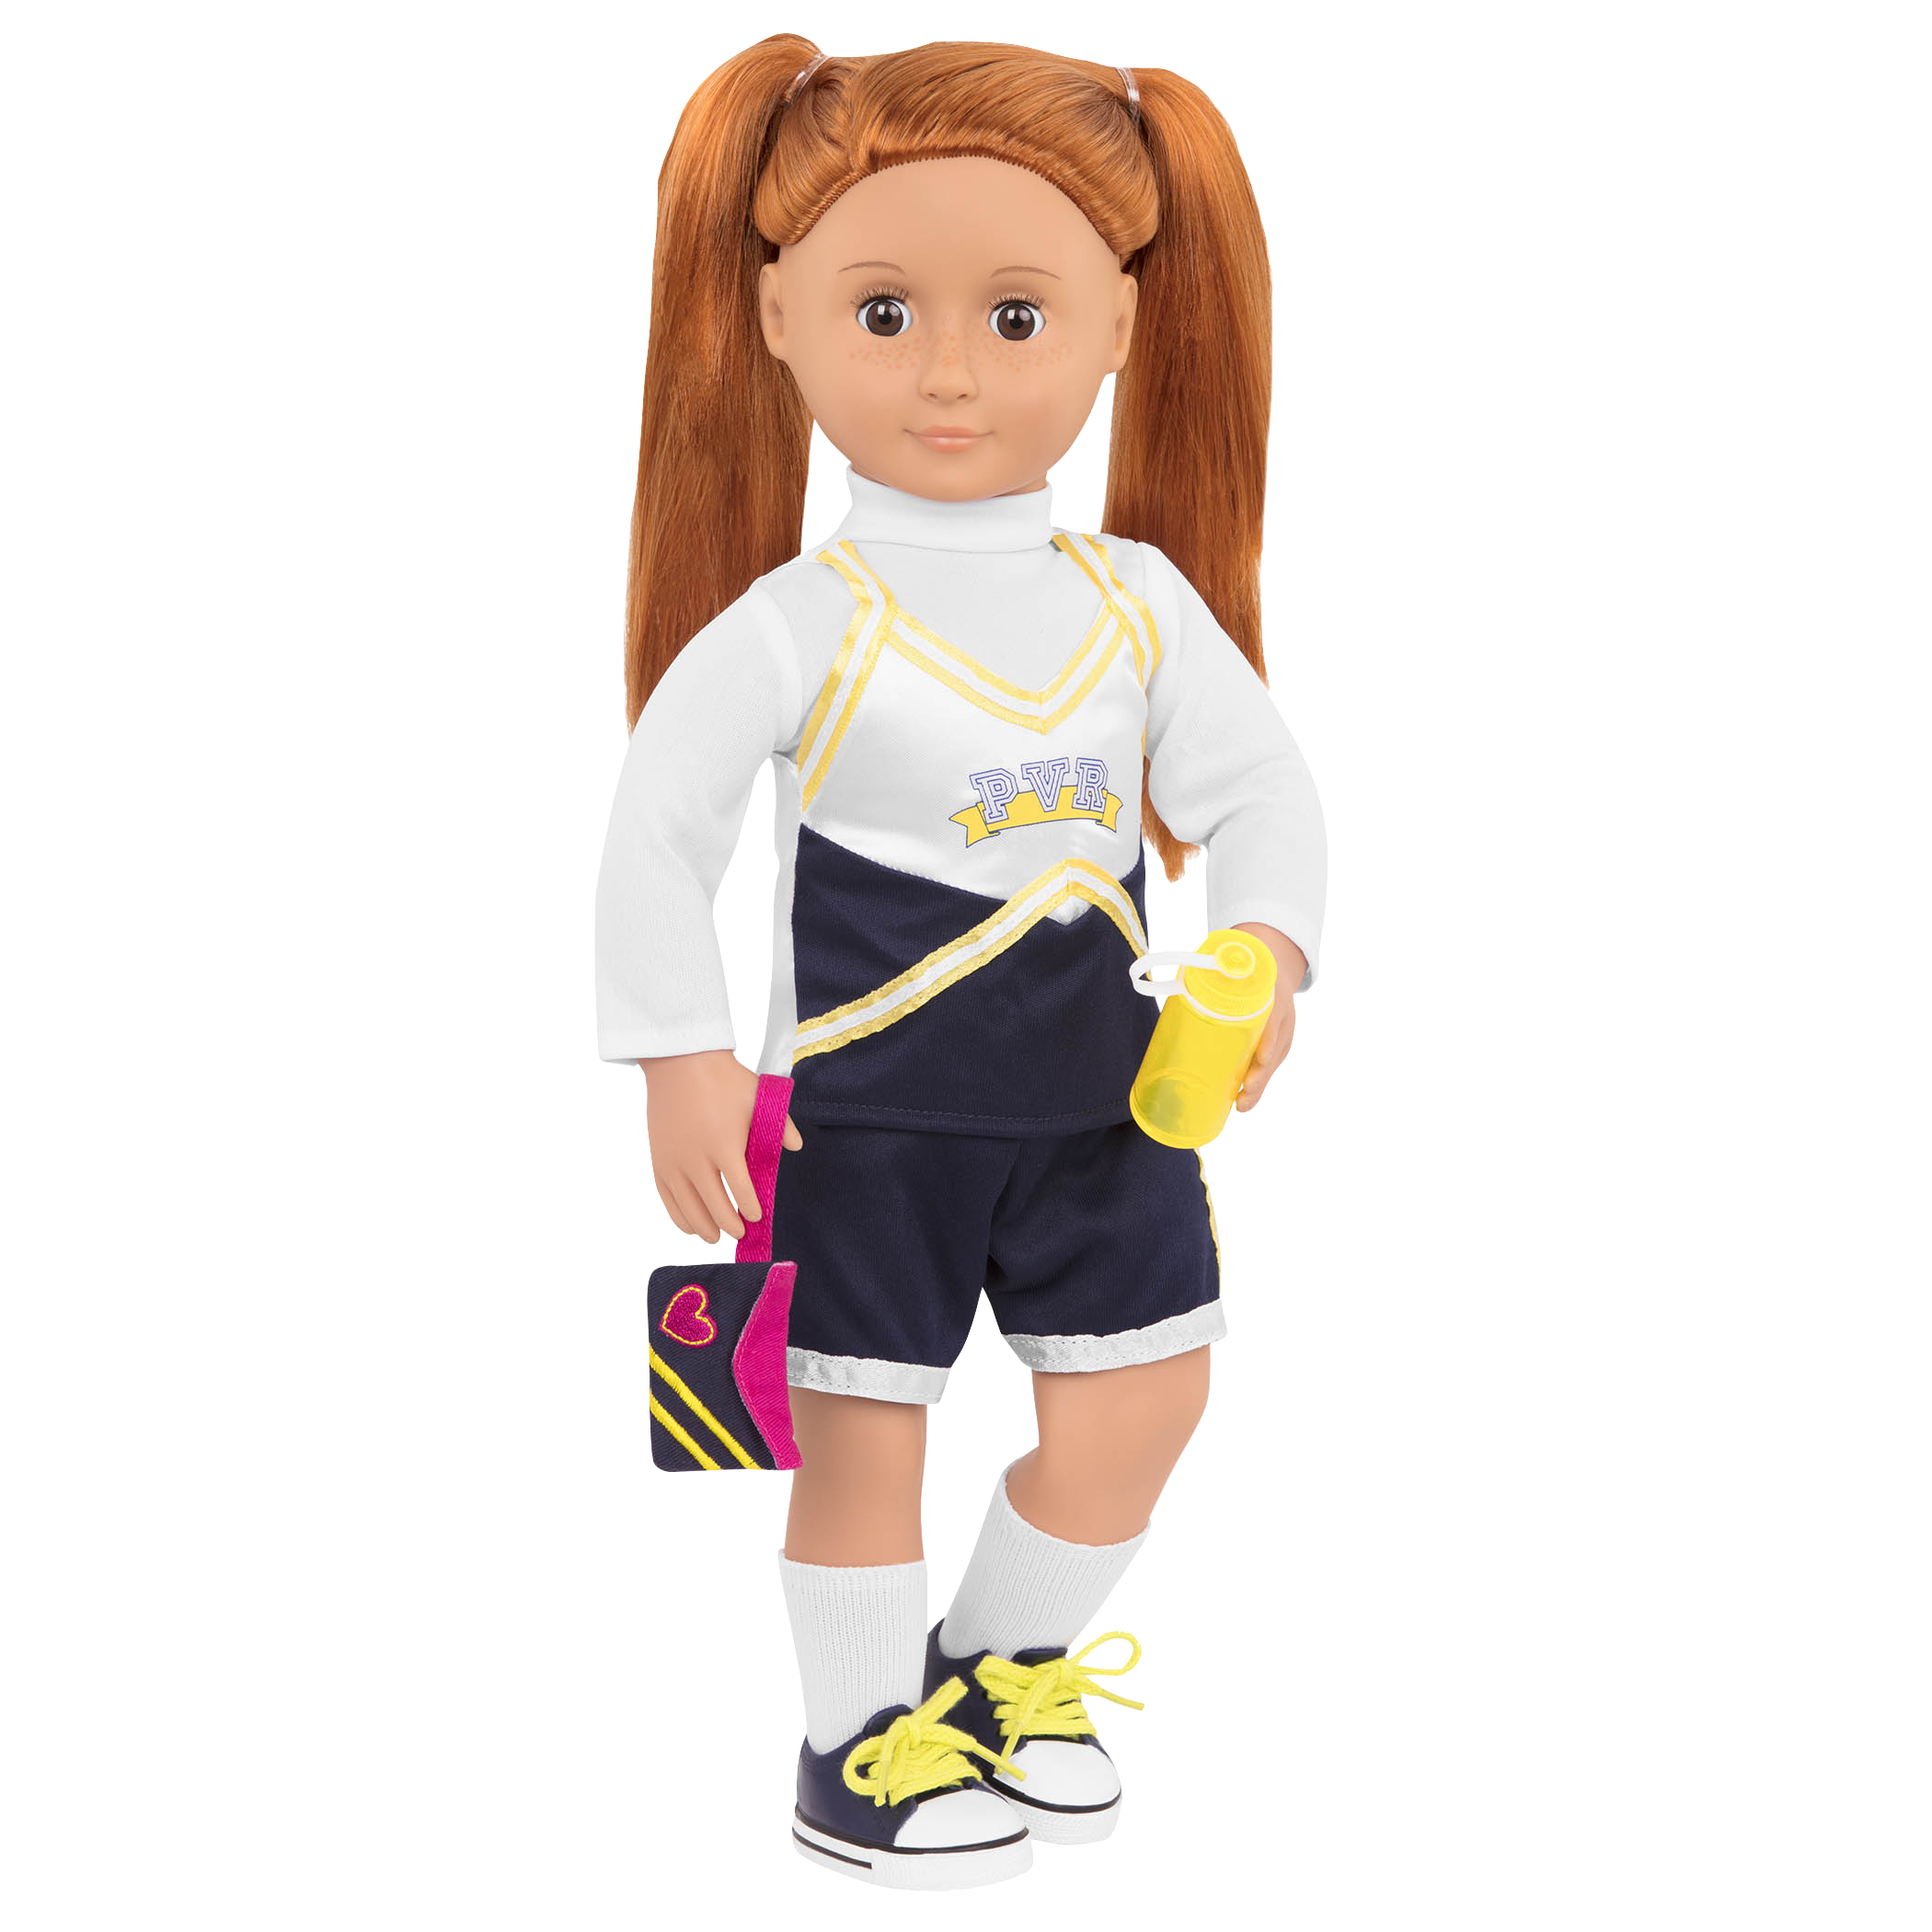 Cheerleader Camp Set Noa doll wearing uniform